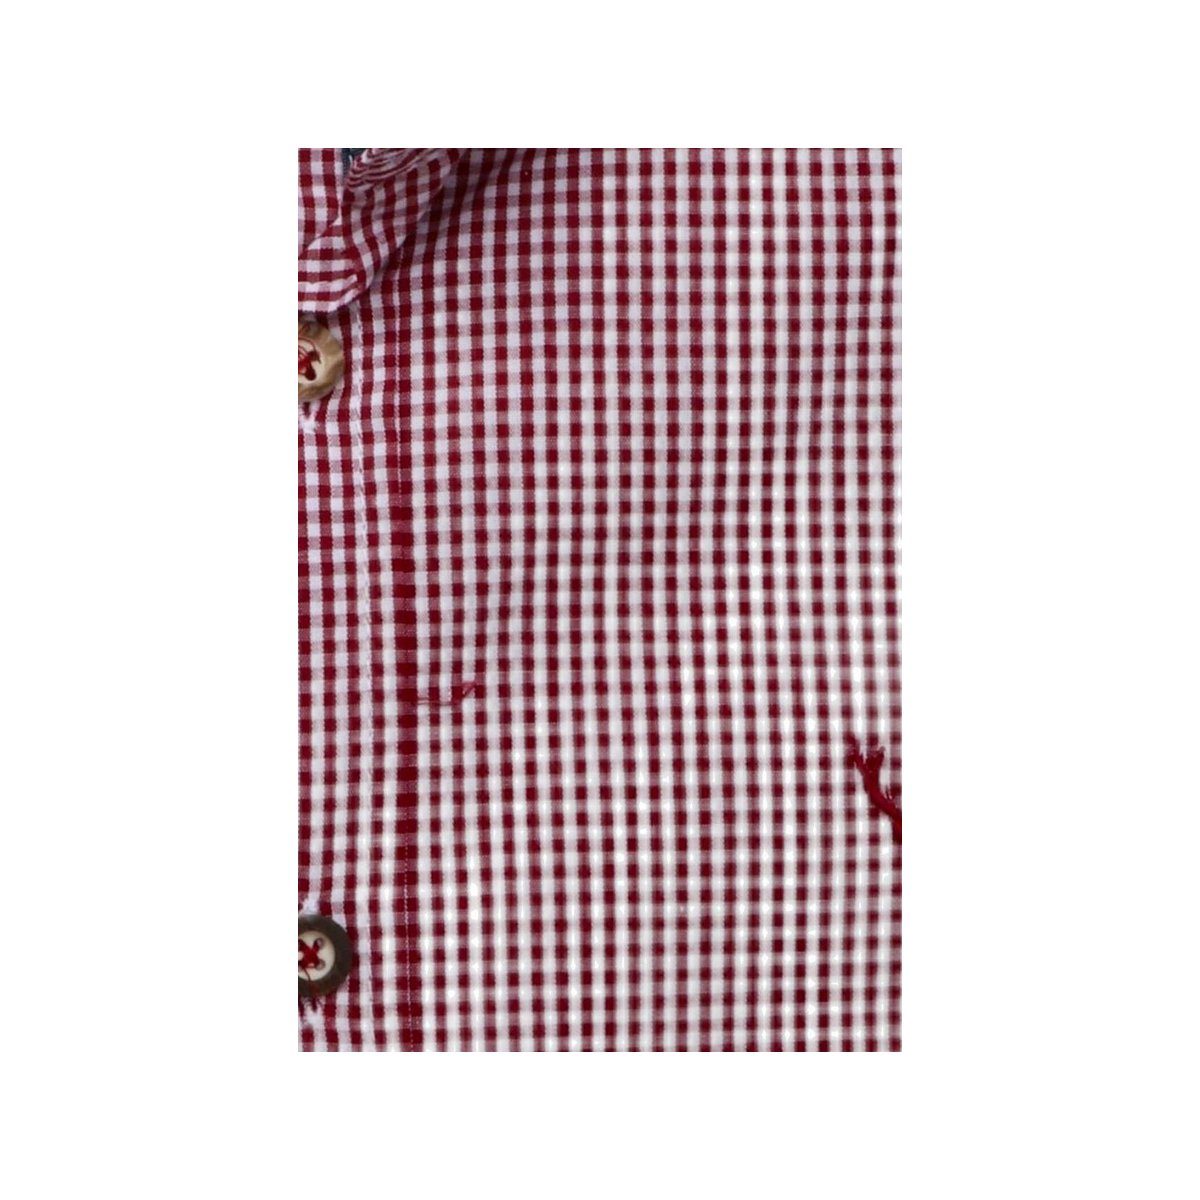 Hatico Unterhemd keine rot 1-St., Angabe, (keine Angabe)